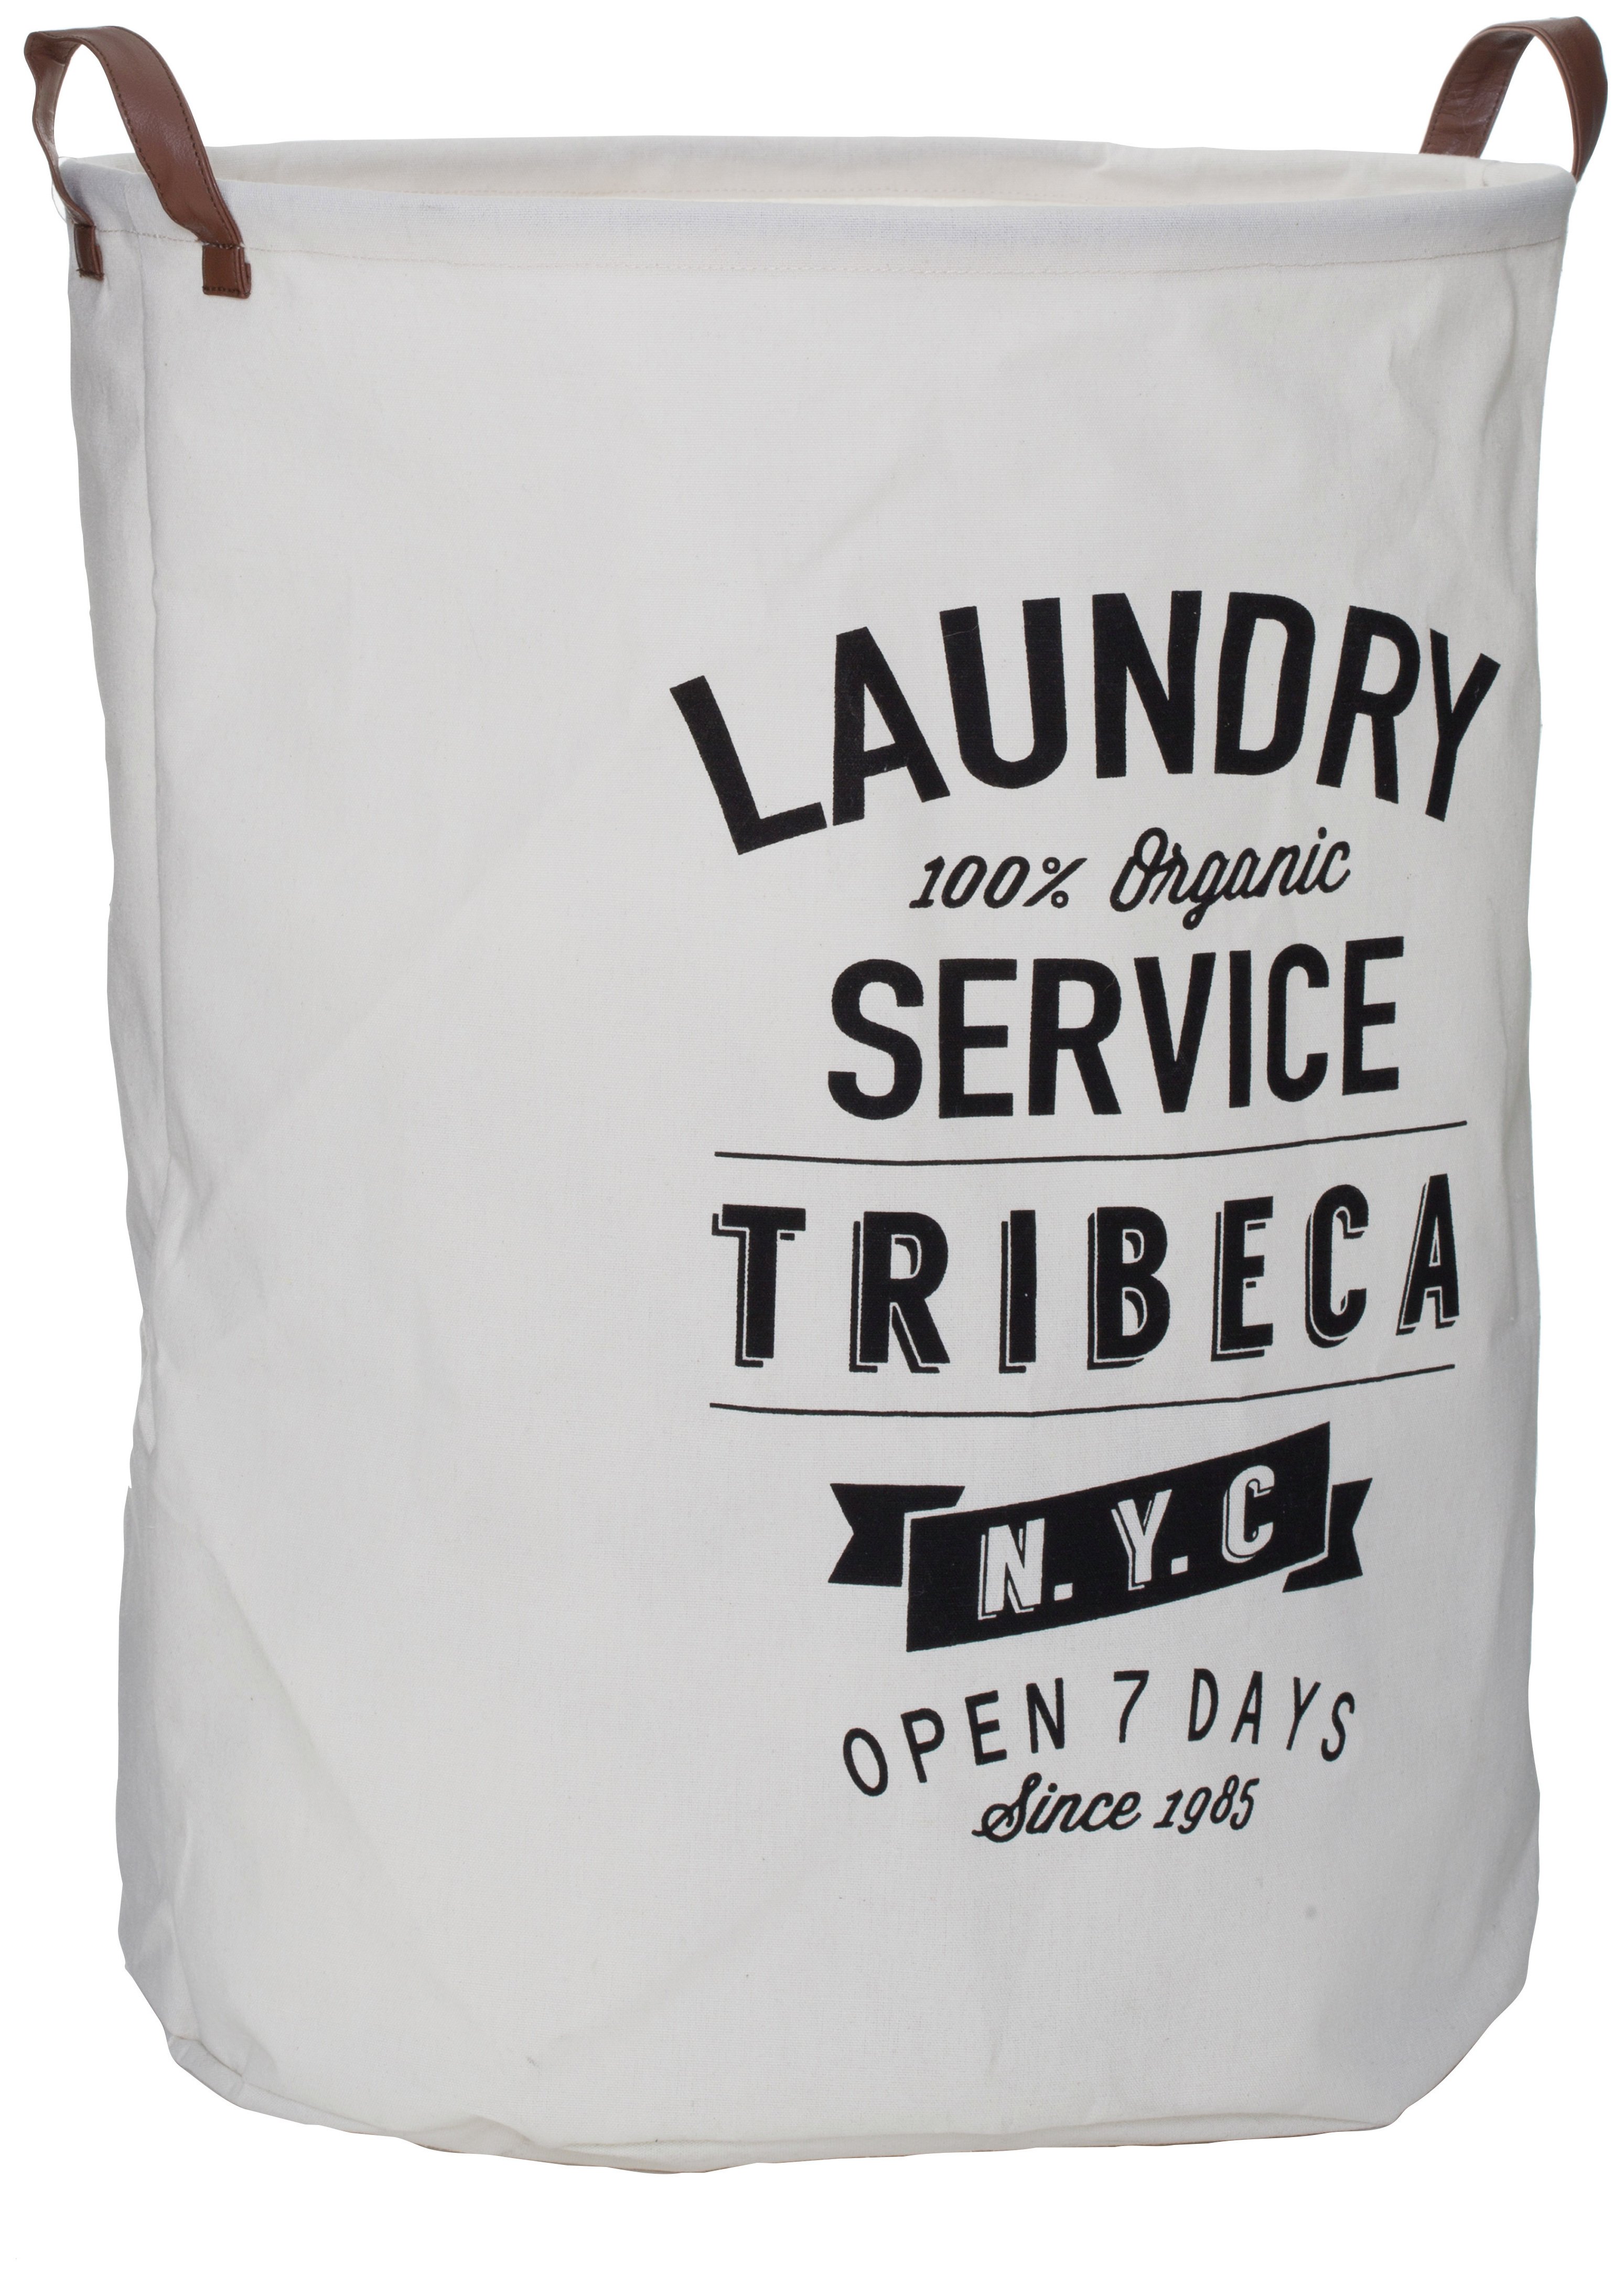 Premier Housewares Tribeca Laundry Bag - White.